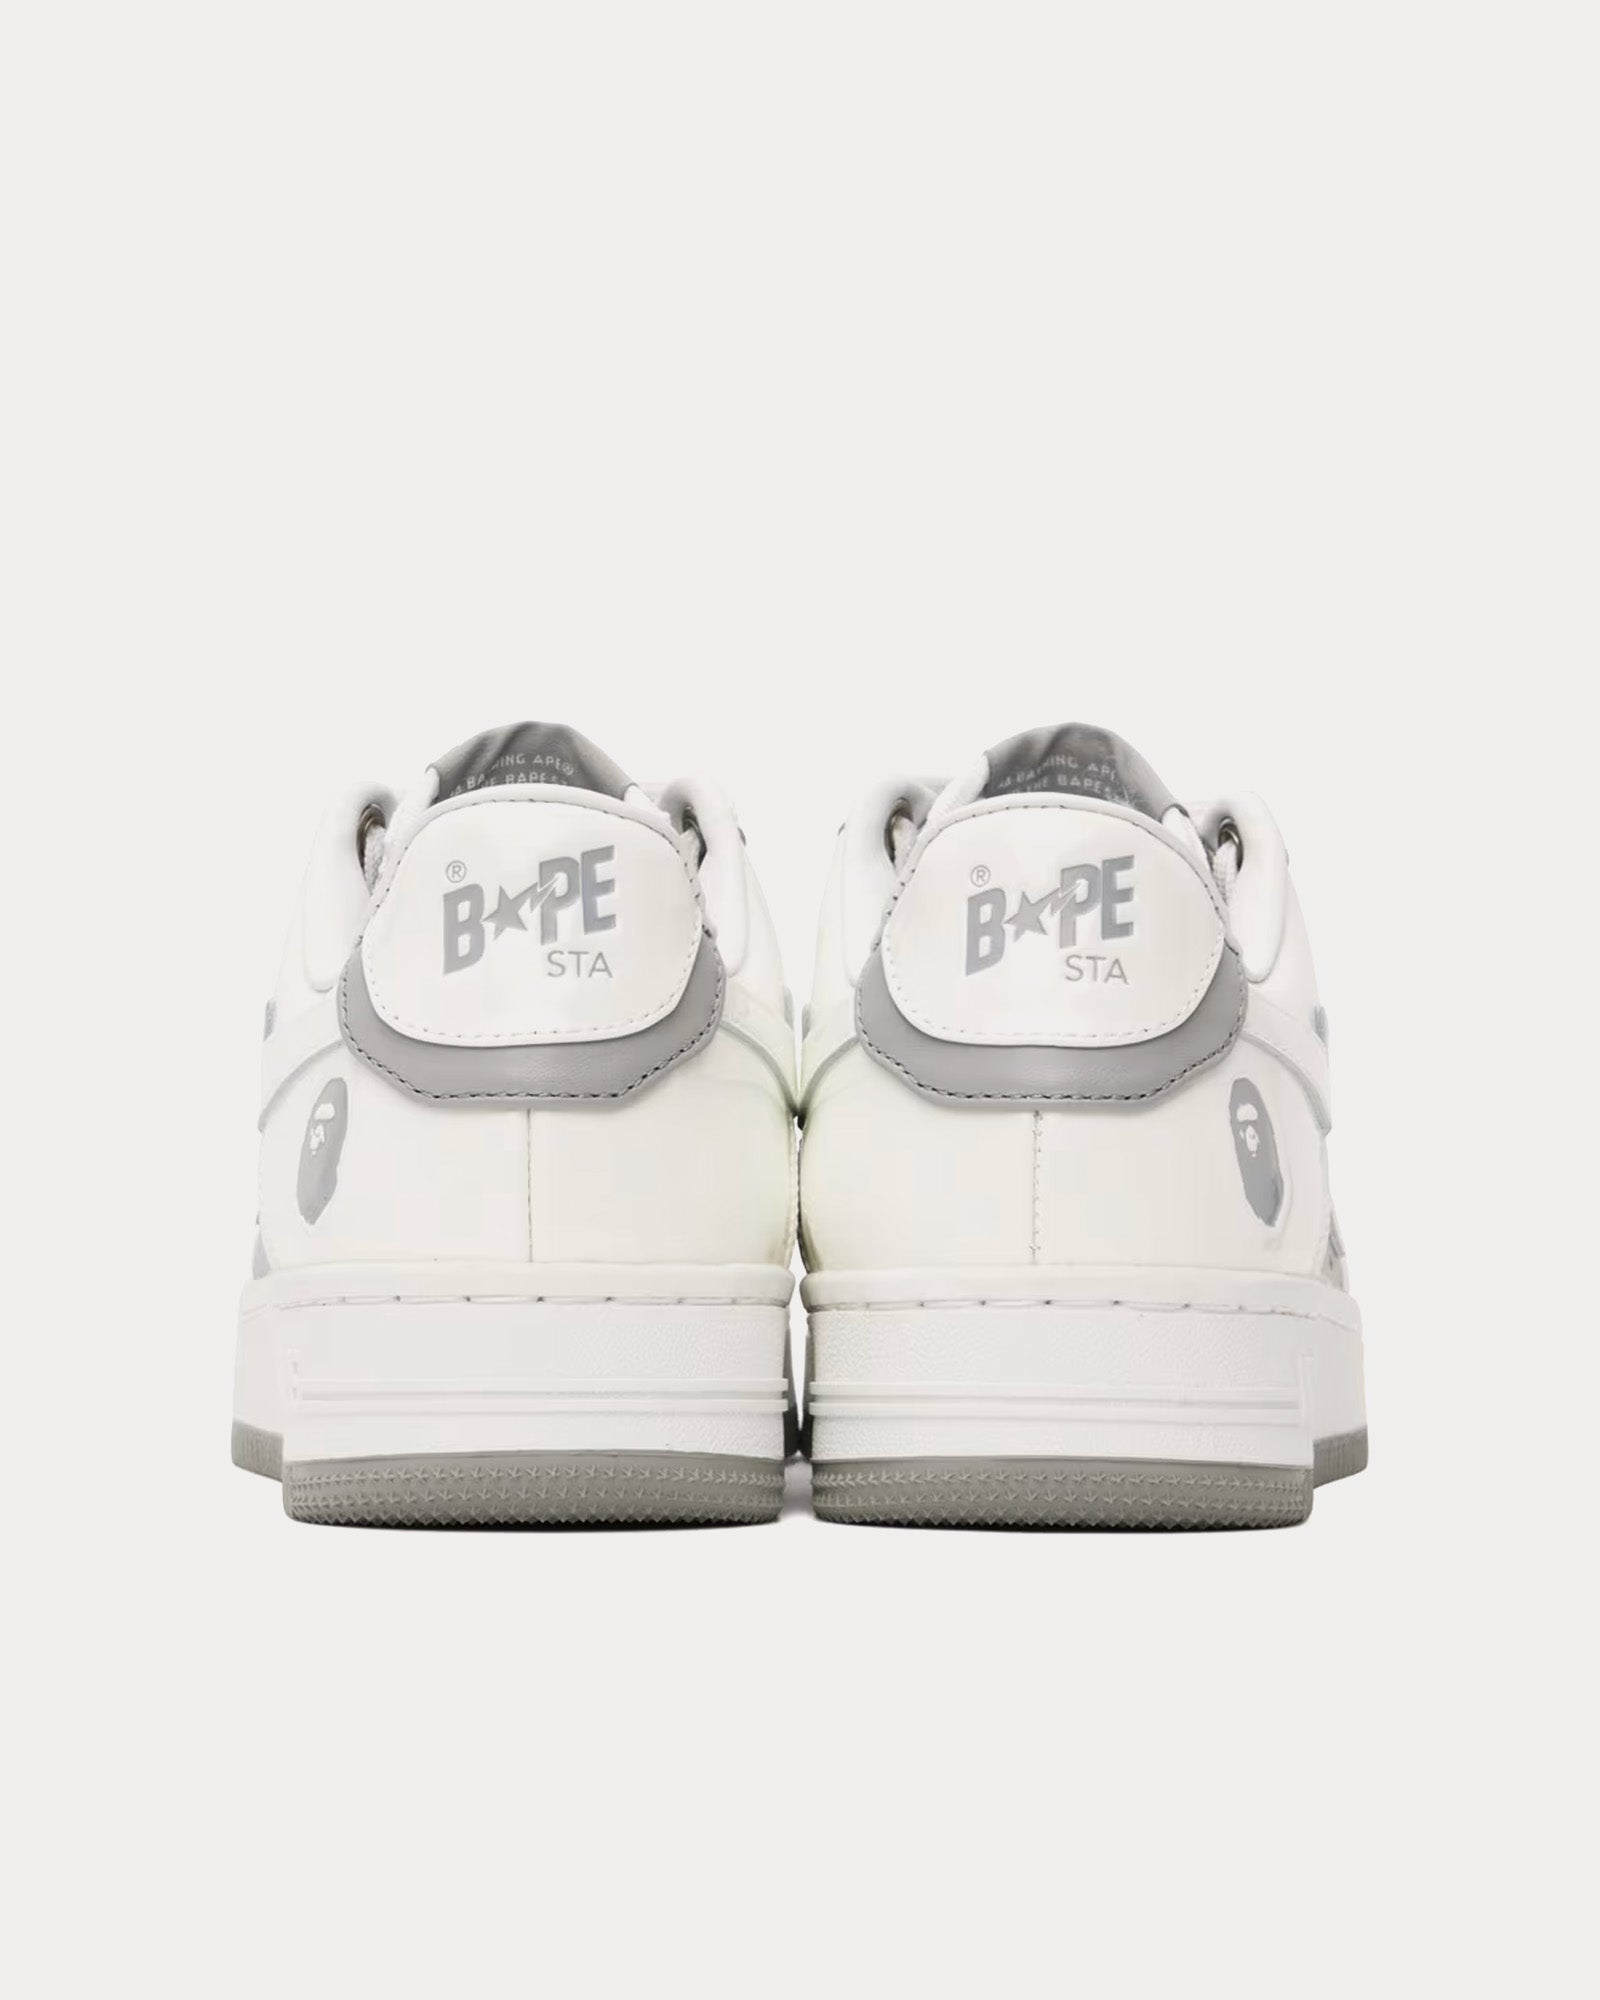 A Bathing APE - Bape Sta #6 White / Grey Low Top Sneakers